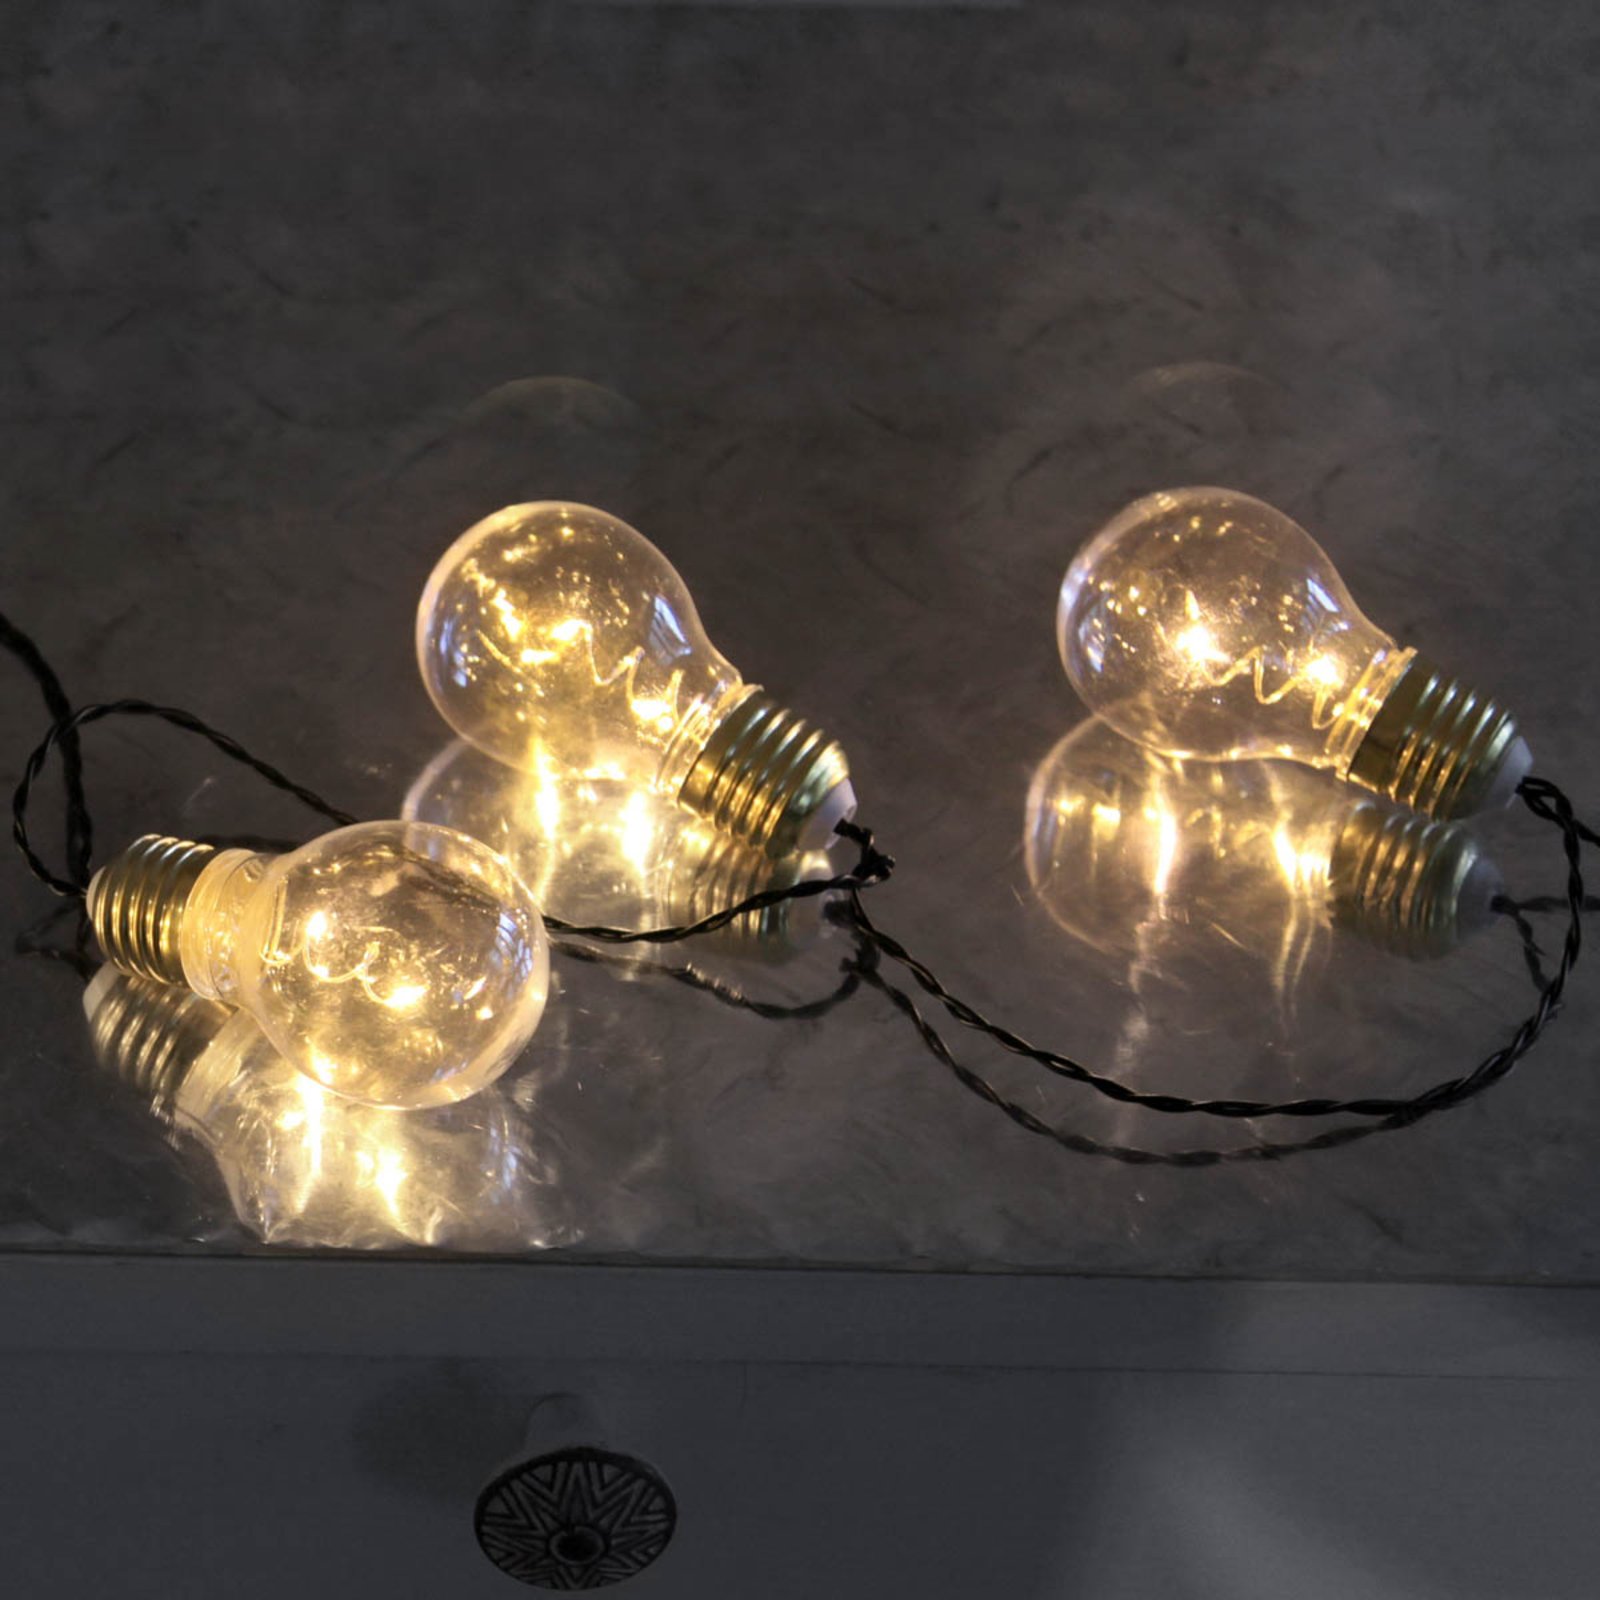 Forbindelse uheldigvis Øde LED-lyskæde Glow Battery m. fem lysk. | Lampegiganten.dk